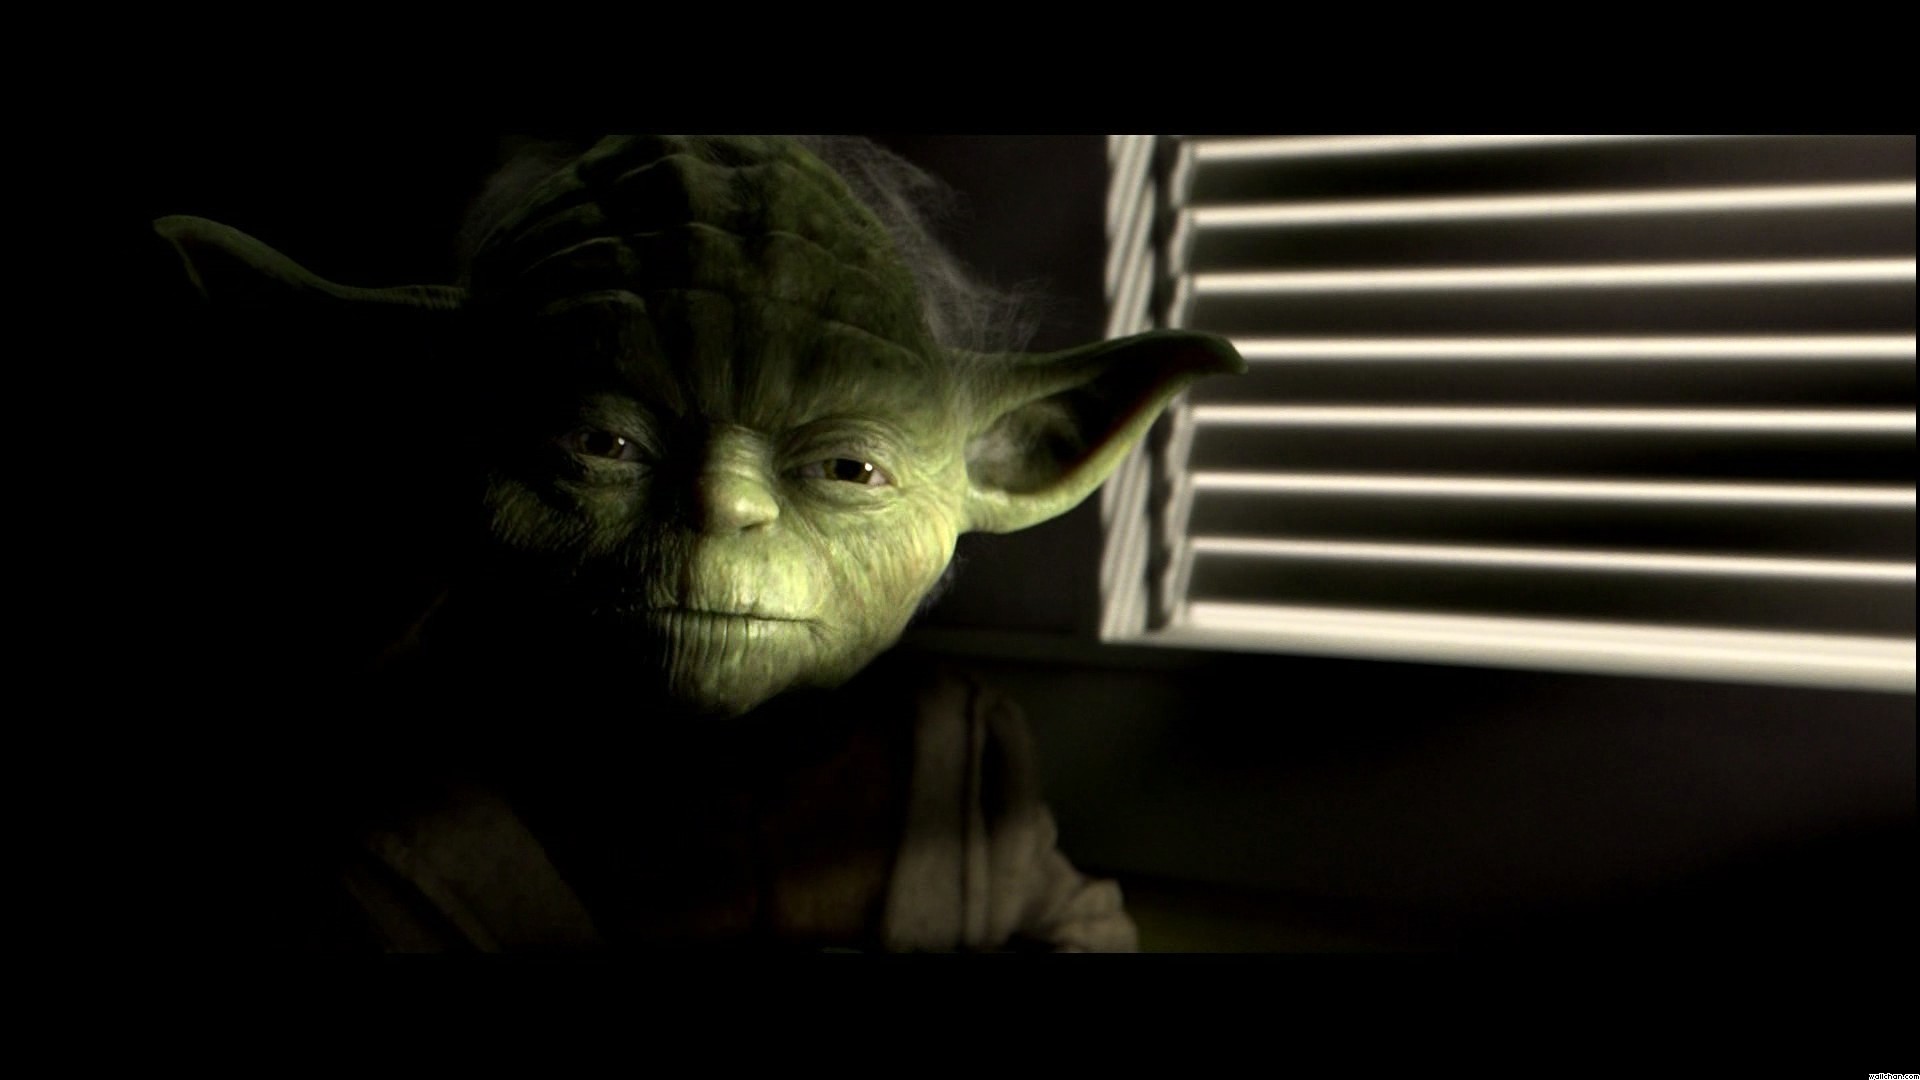 General 1920x1080 movies Yoda Star Wars CGI Jedi science fiction Star Wars: Episode III - The Revenge of the Sith green skin Star Wars Heroes